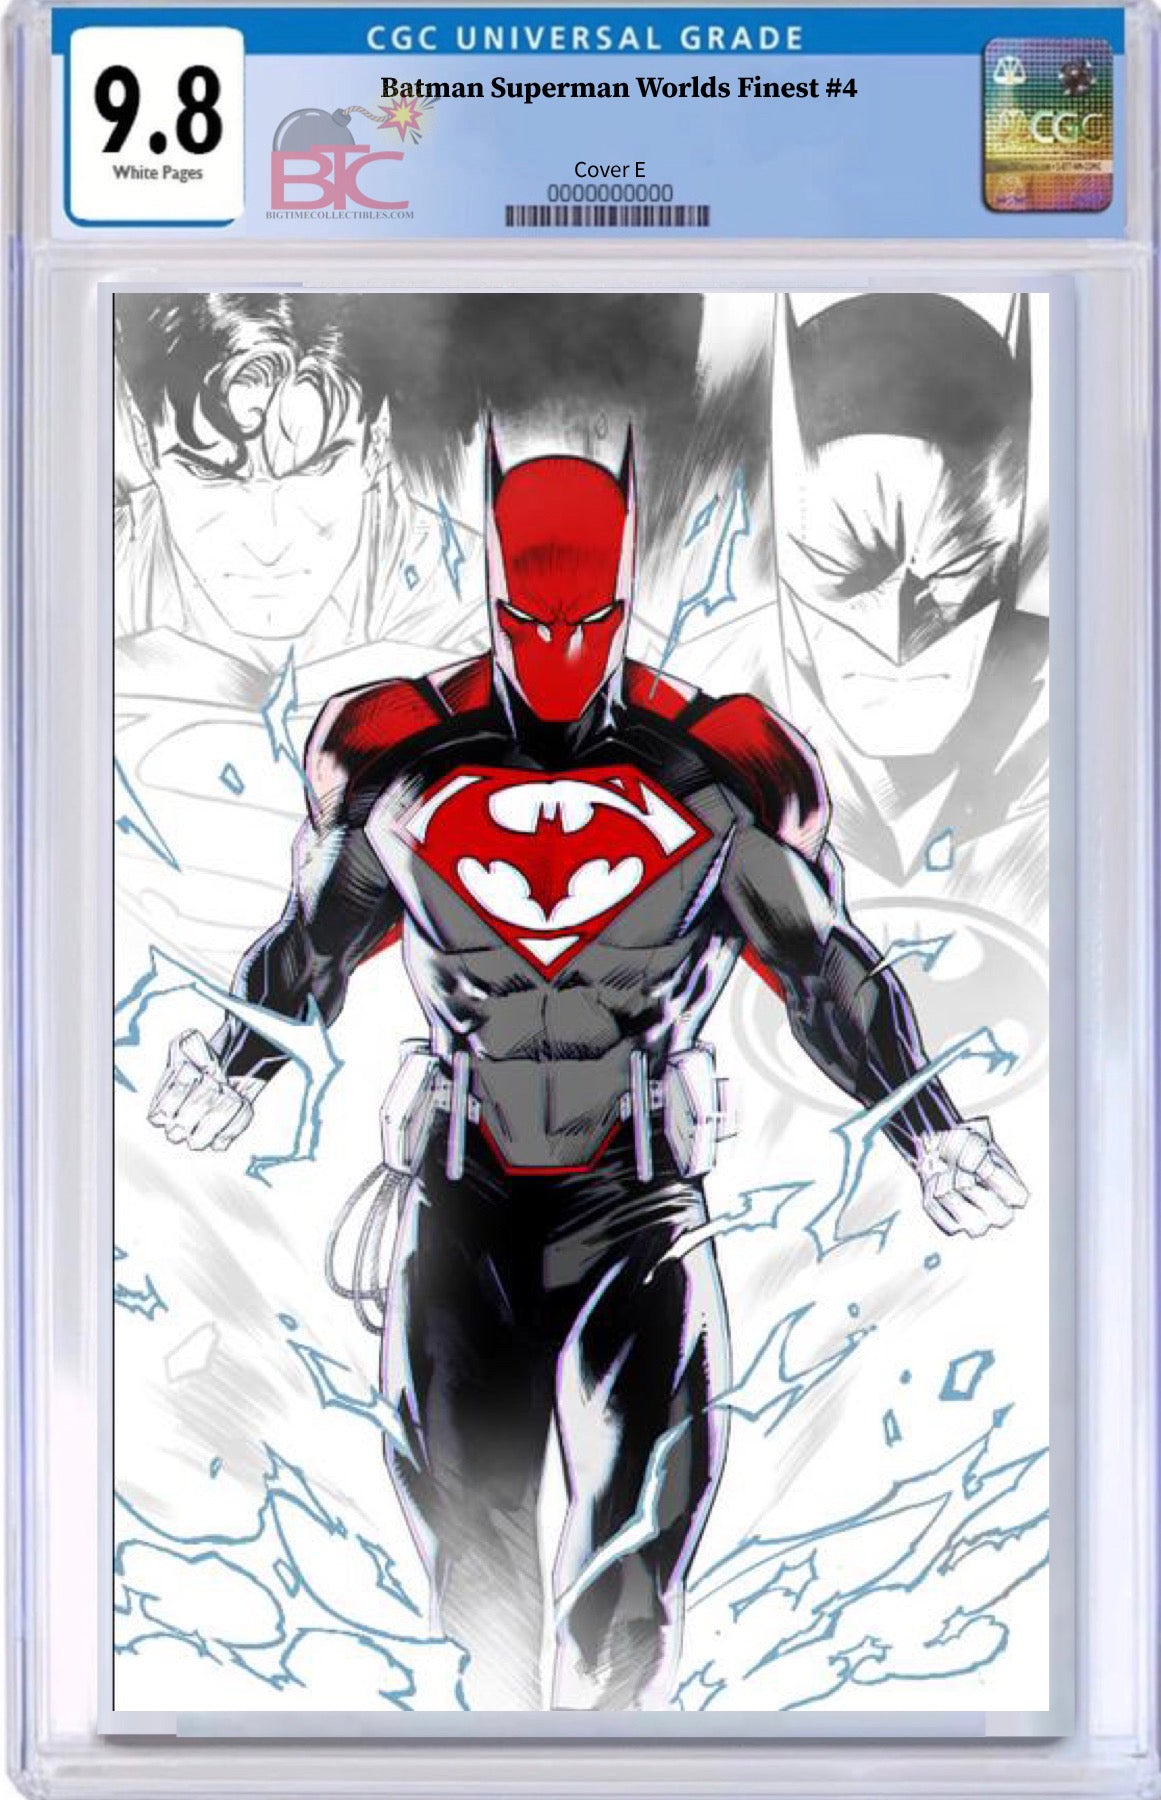 BATMAN SUPERMAN WORLDS FINEST #4 FUSION VARIANT CGC 9.8 (IN STOCK)